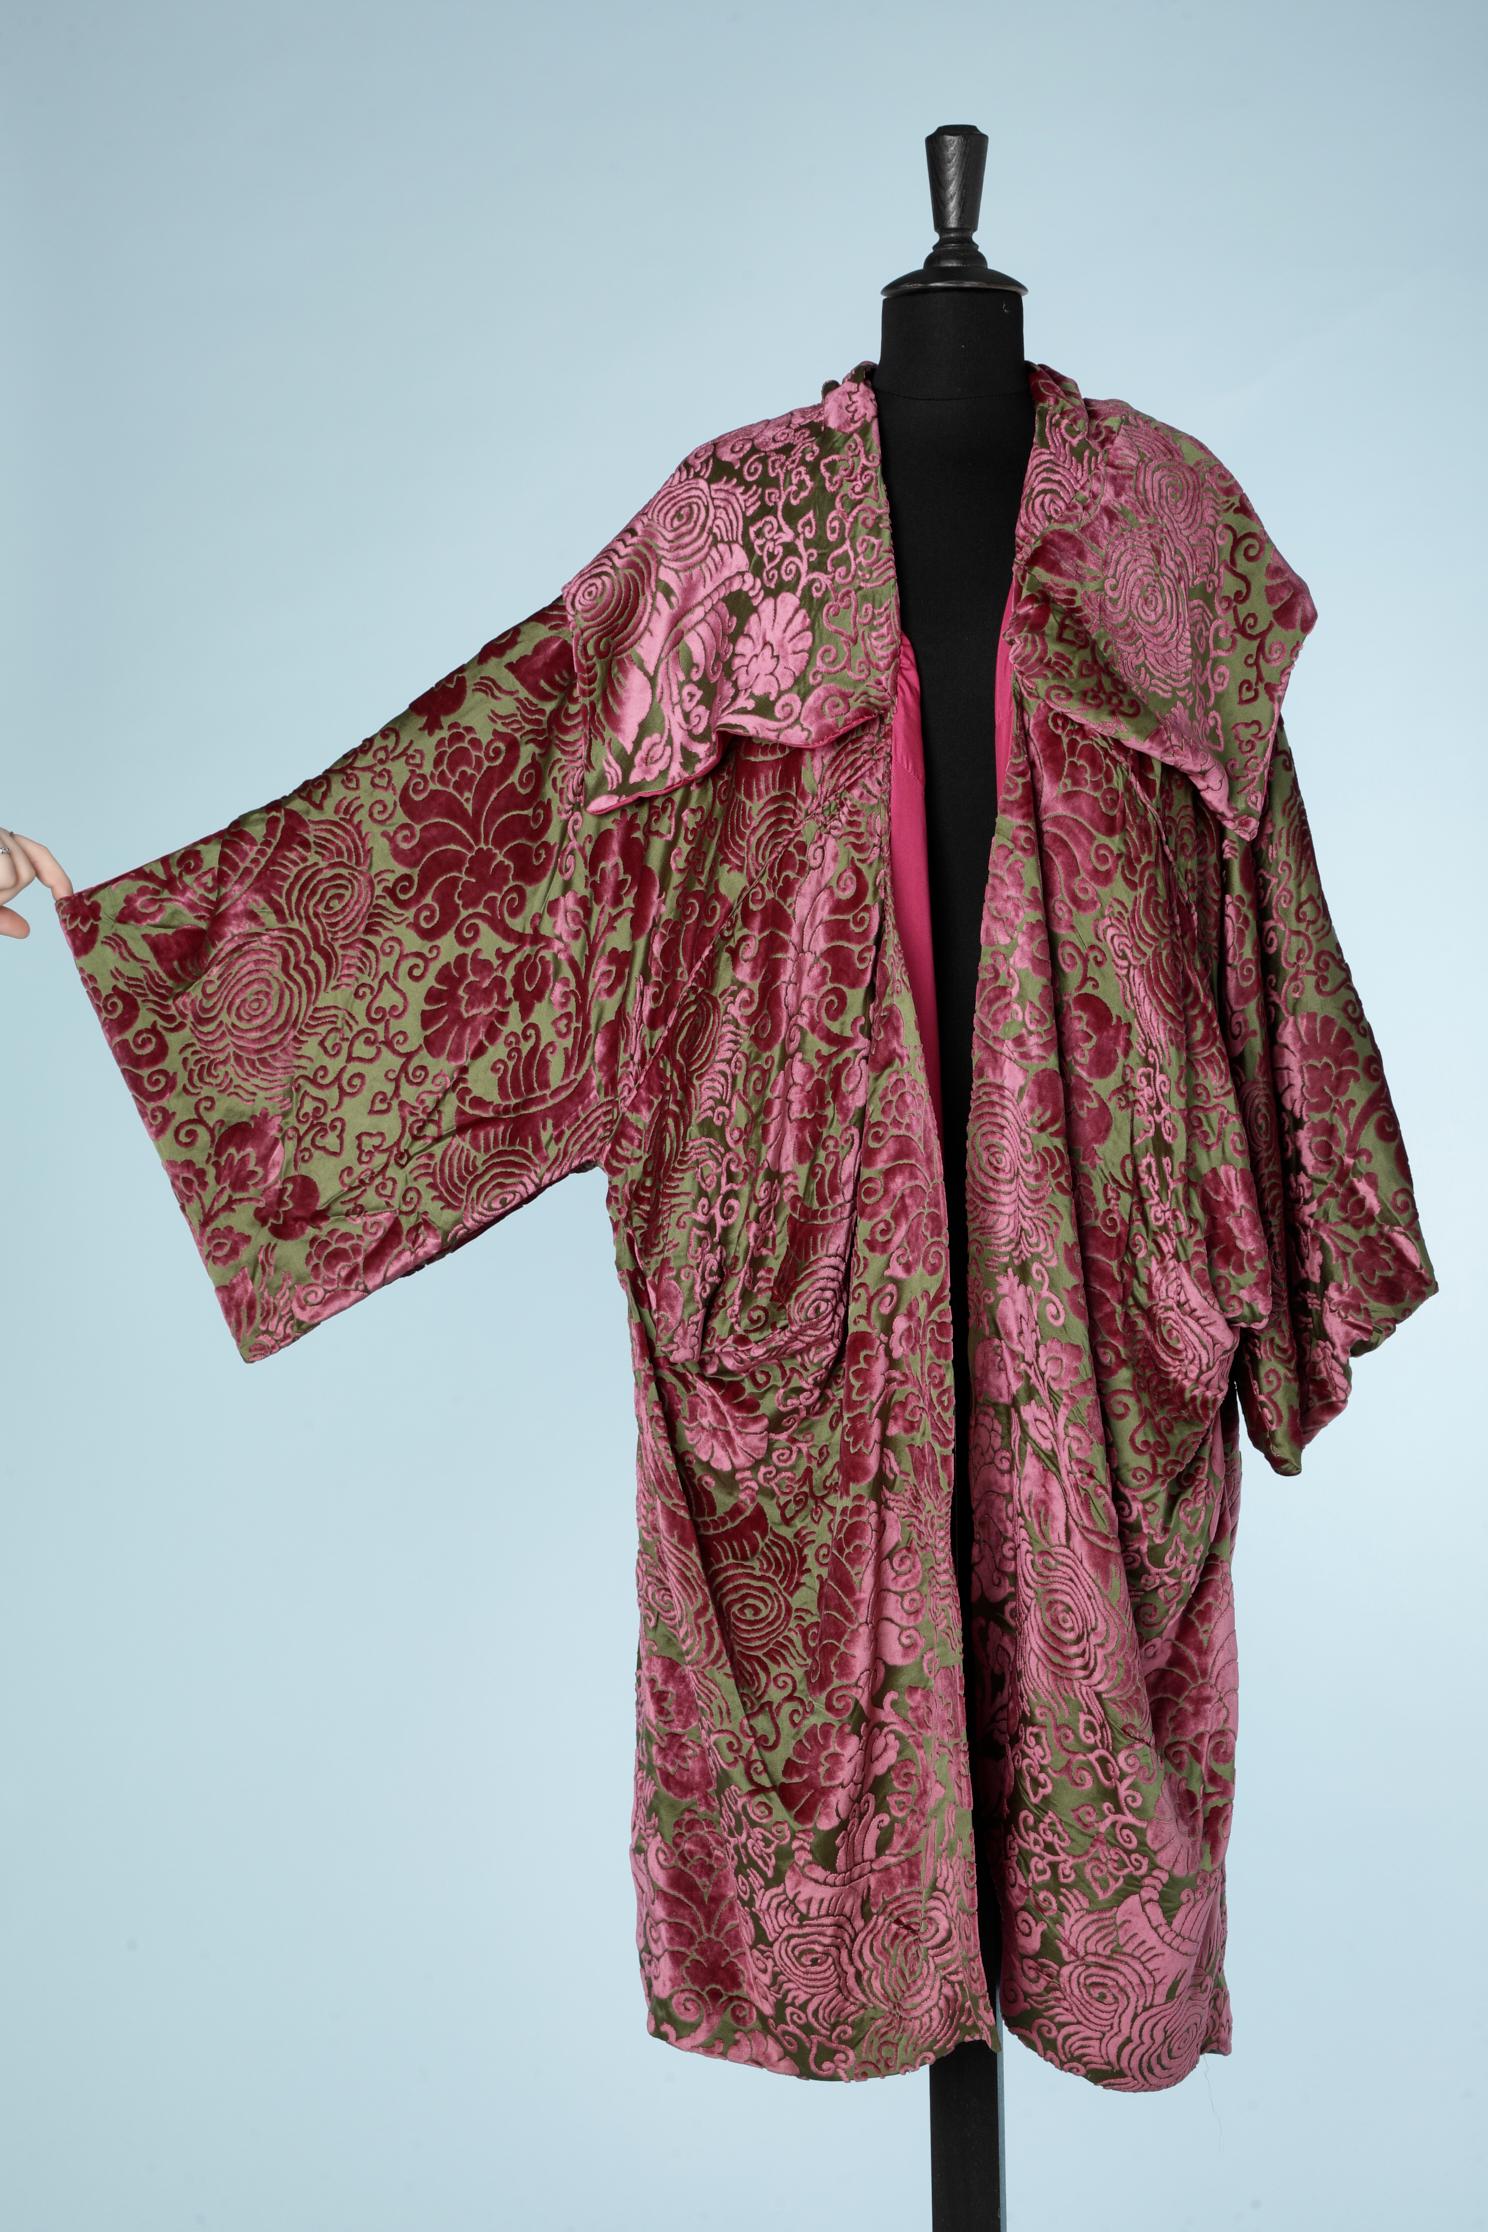 Opera coat in purple damask velvet on green satin base Circa 1920.
Fuchsia silk lining. 
SIZE L